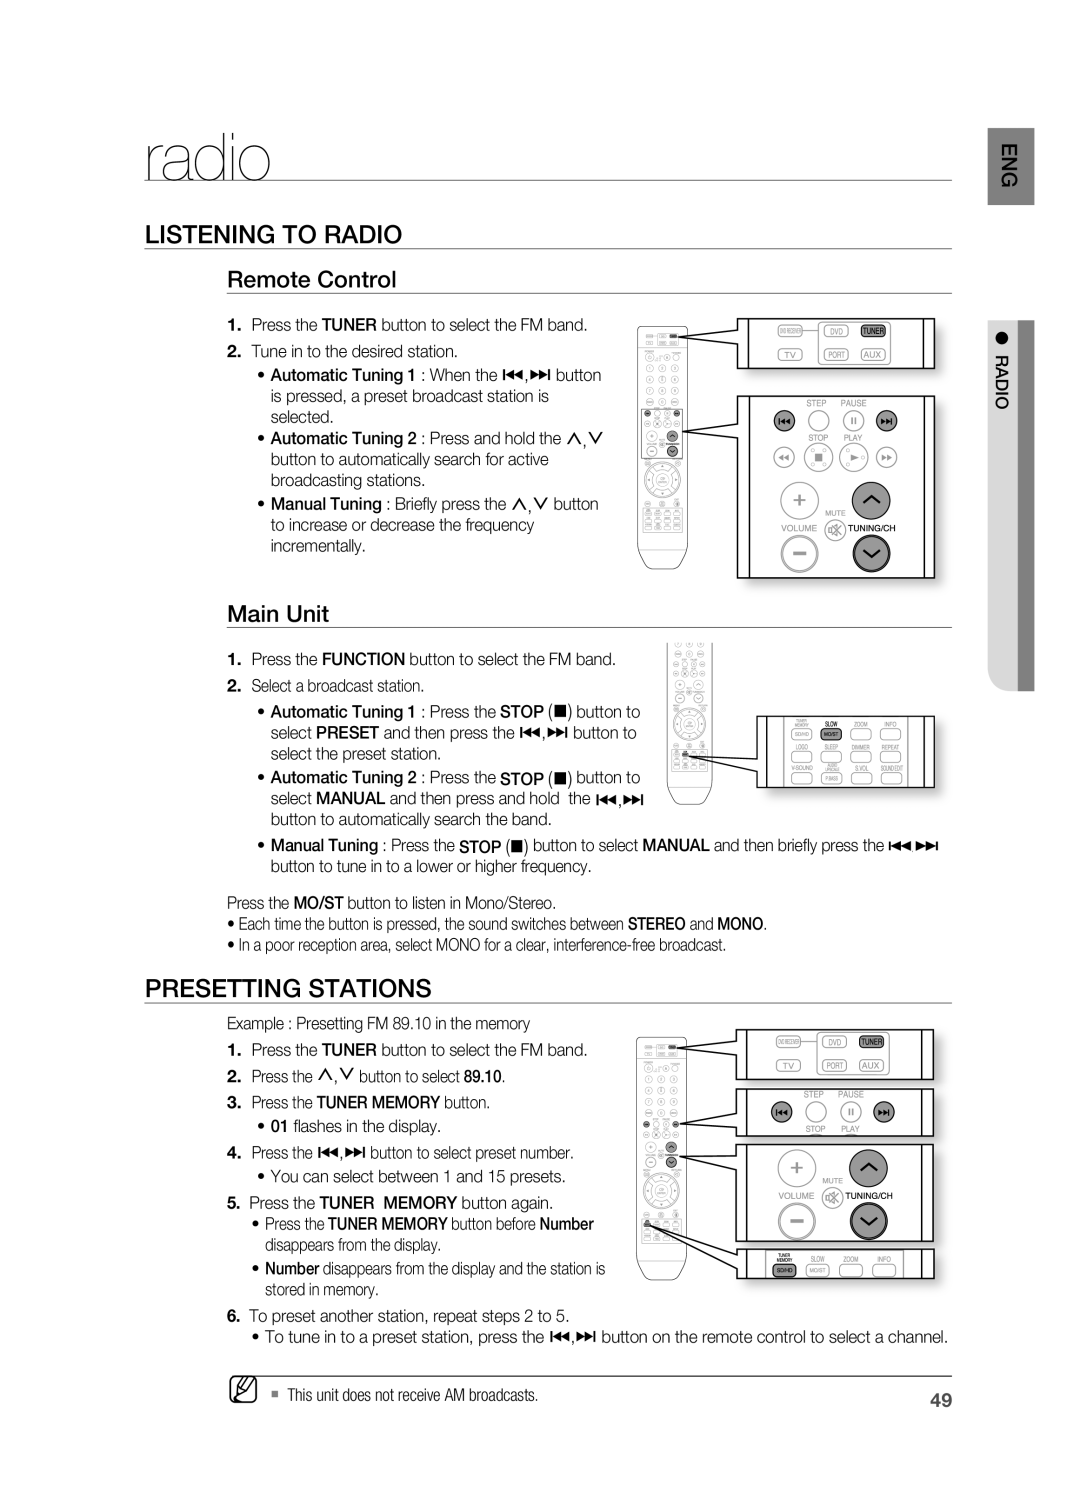 Sony HT-X810 user manual radio, lISTENING TO rADIO, PrESETTING STATIONS, remote Control, Main Unit 